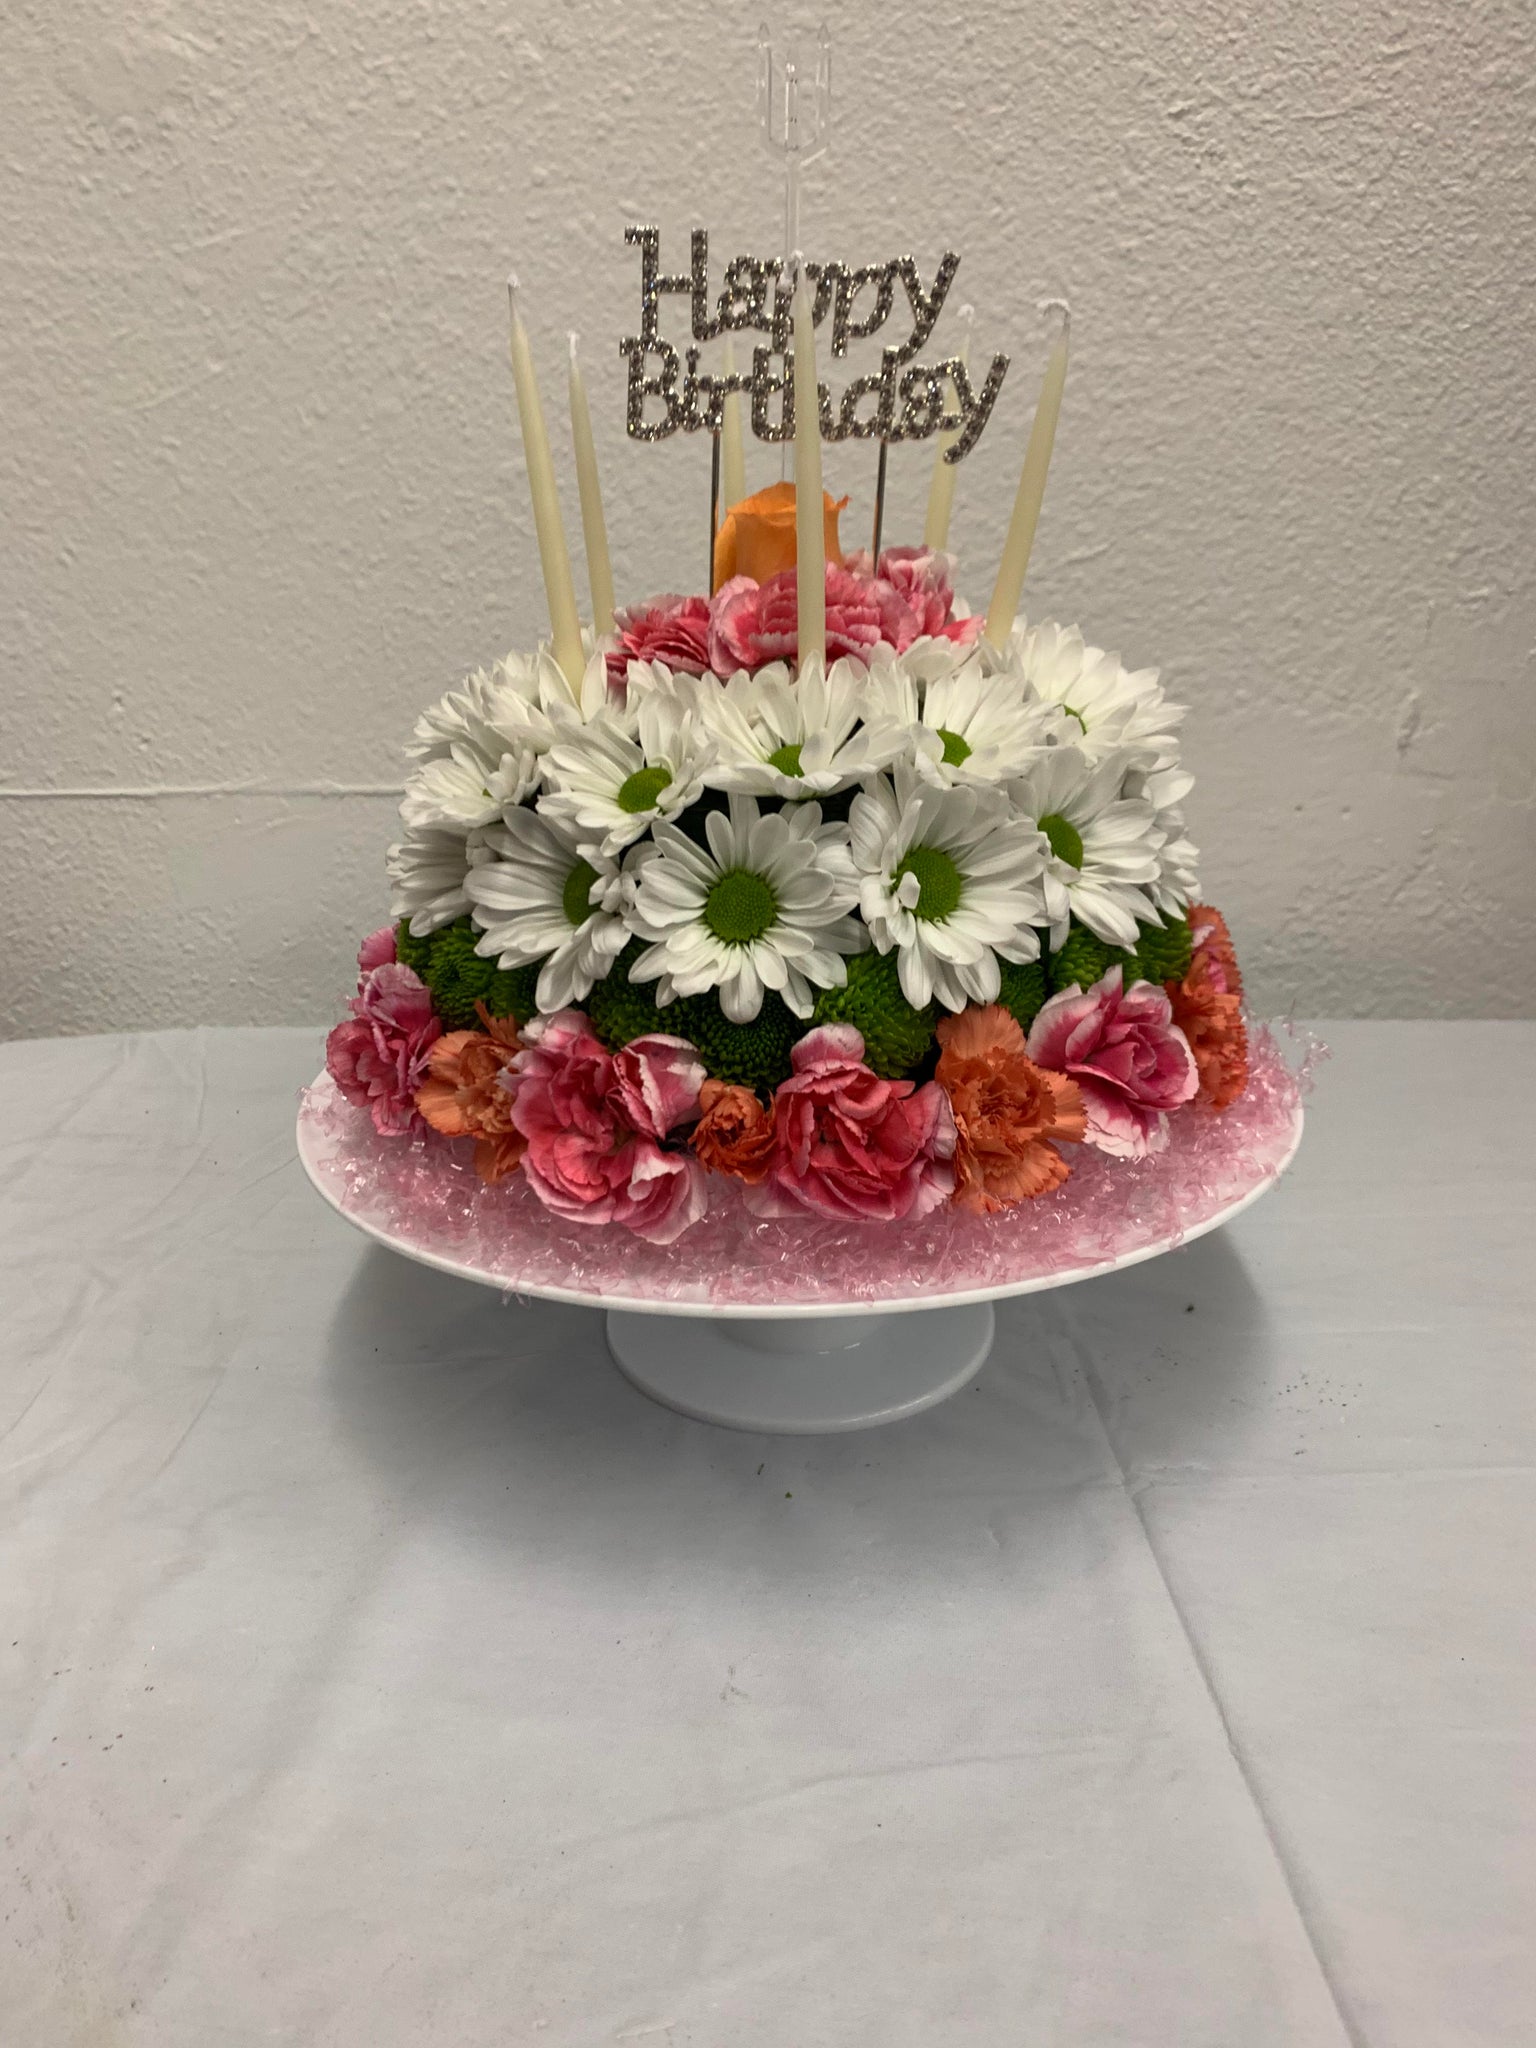 Online 12 Red Roses Bouquet with Gateau Fraise Cake in Japan -  Florajapan.Com